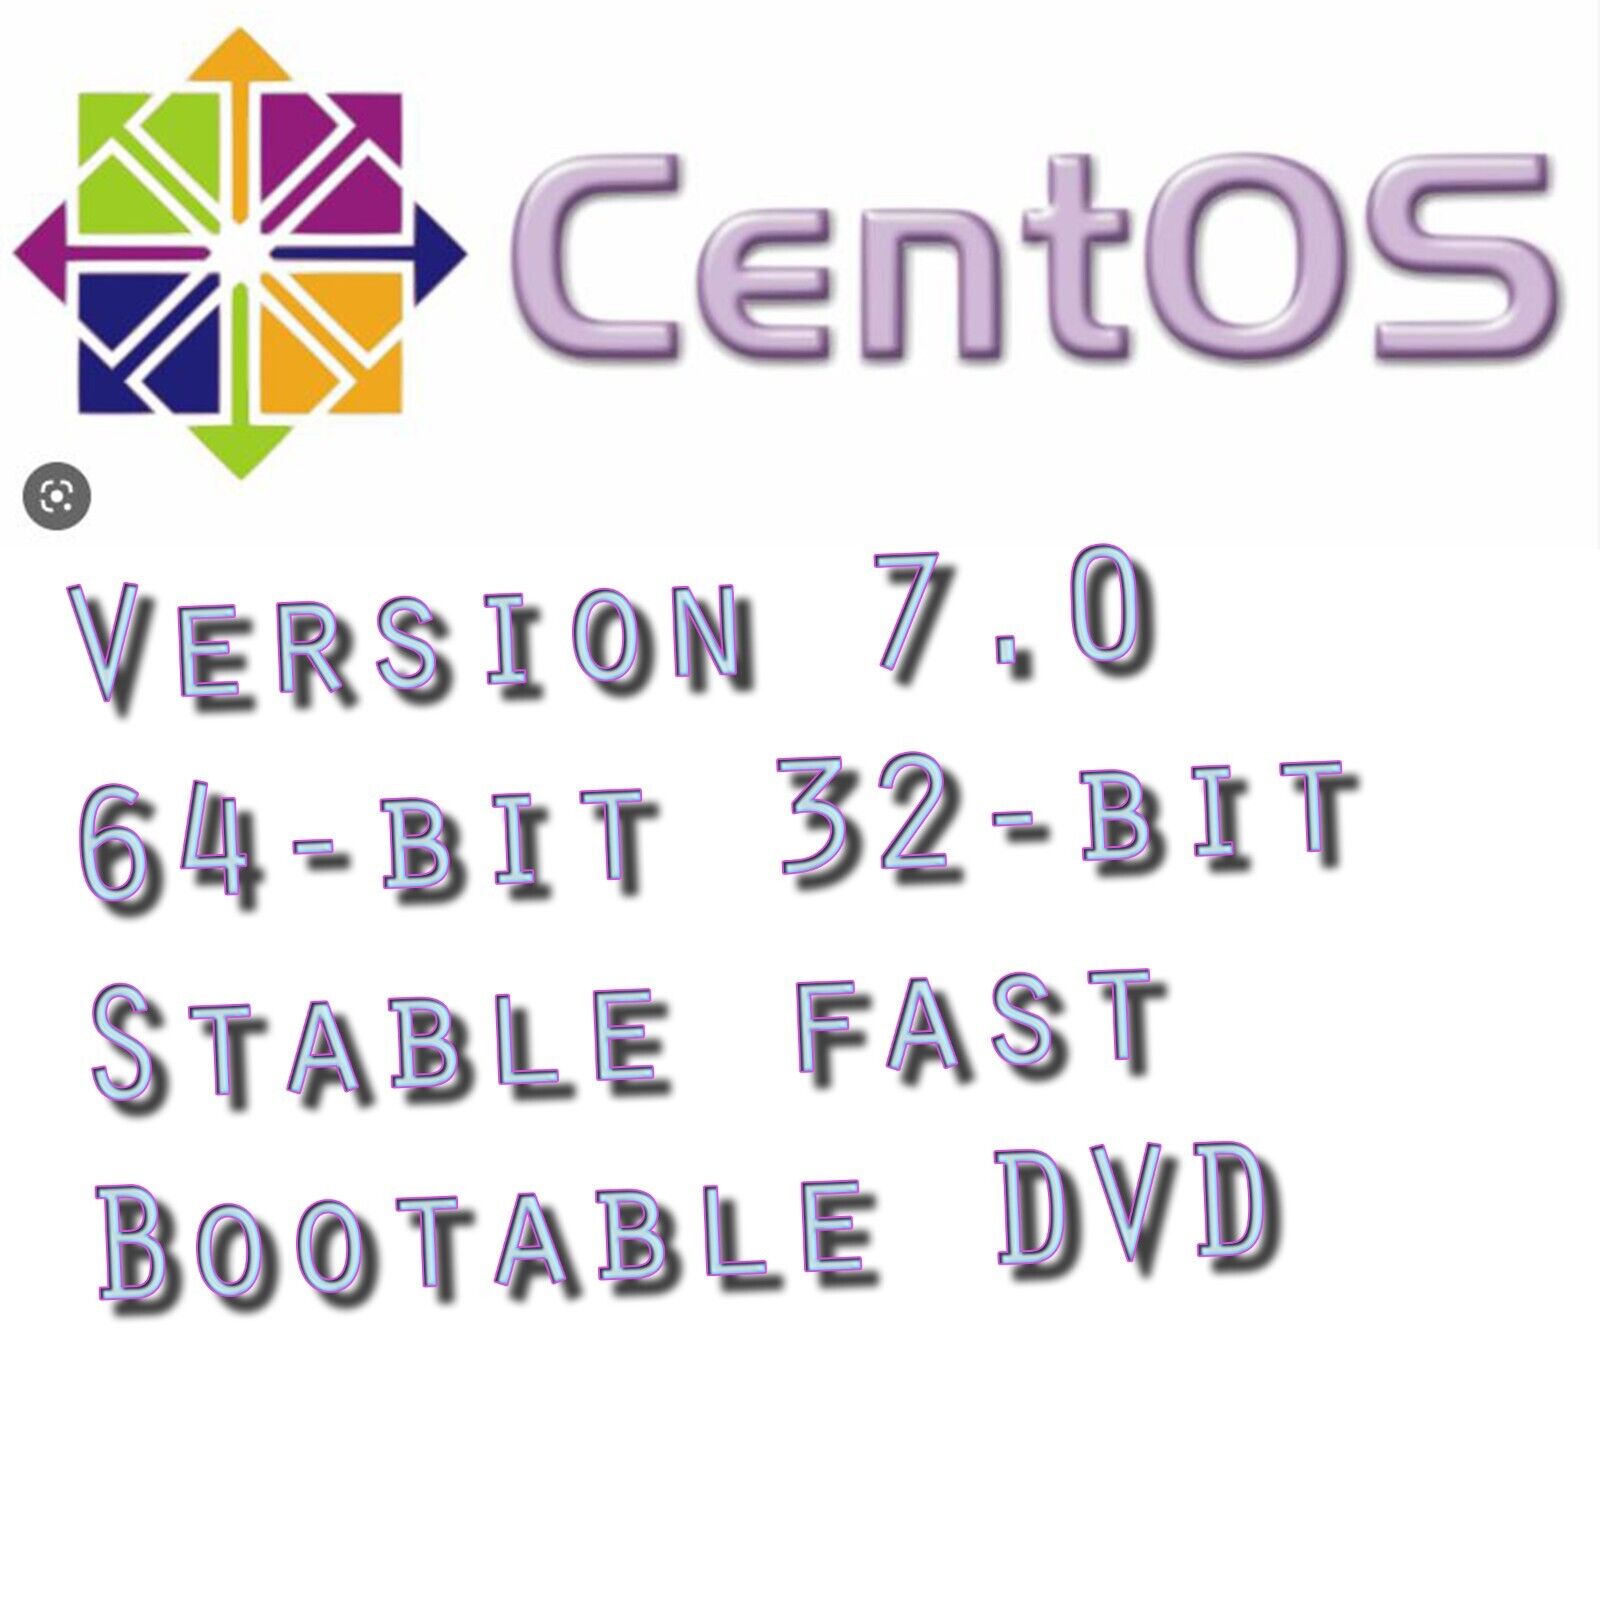 CentOS 7 64 Bit 32 Bit Linux OS DVD installer Laser Printed Label Fast Shipping